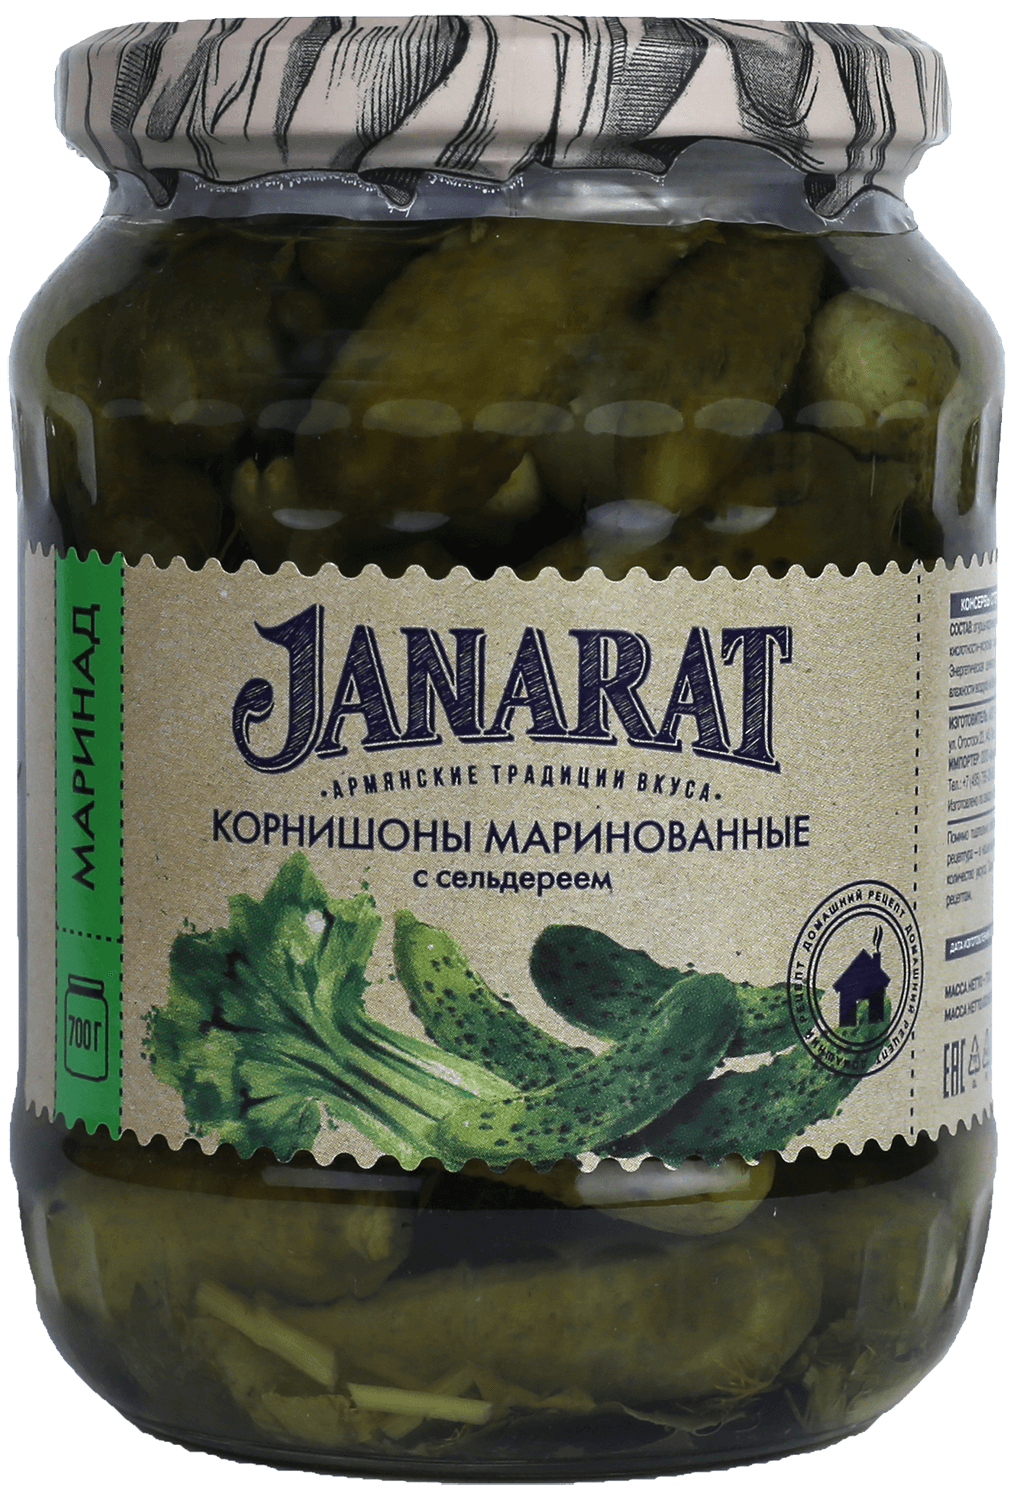 Pickled cucumber with celery Janarat